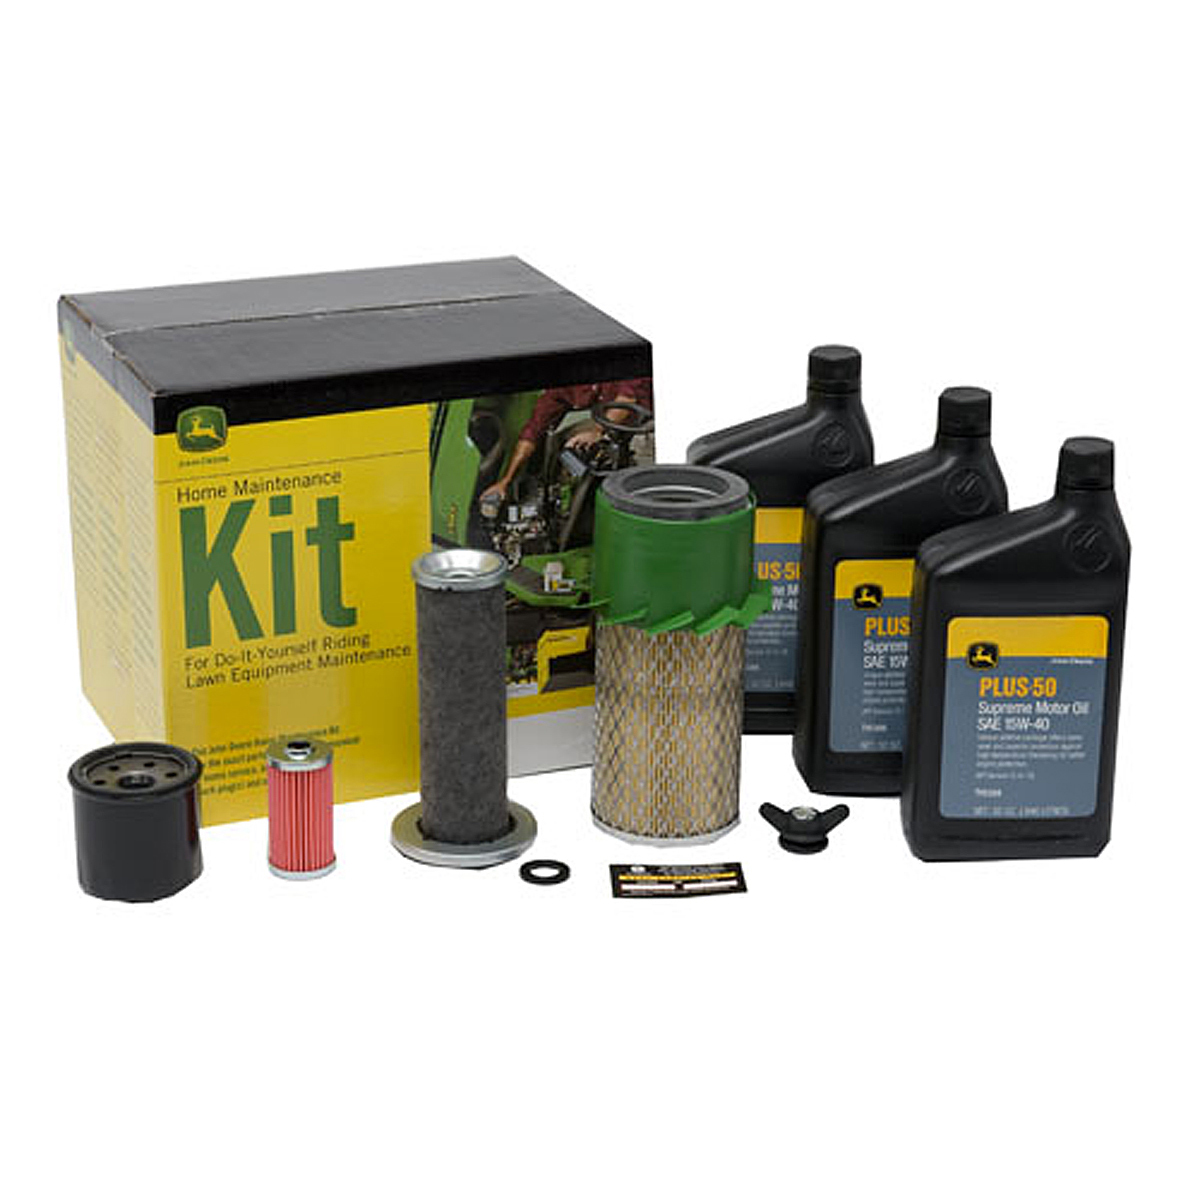 Home Maintenance Kit For 400 Series